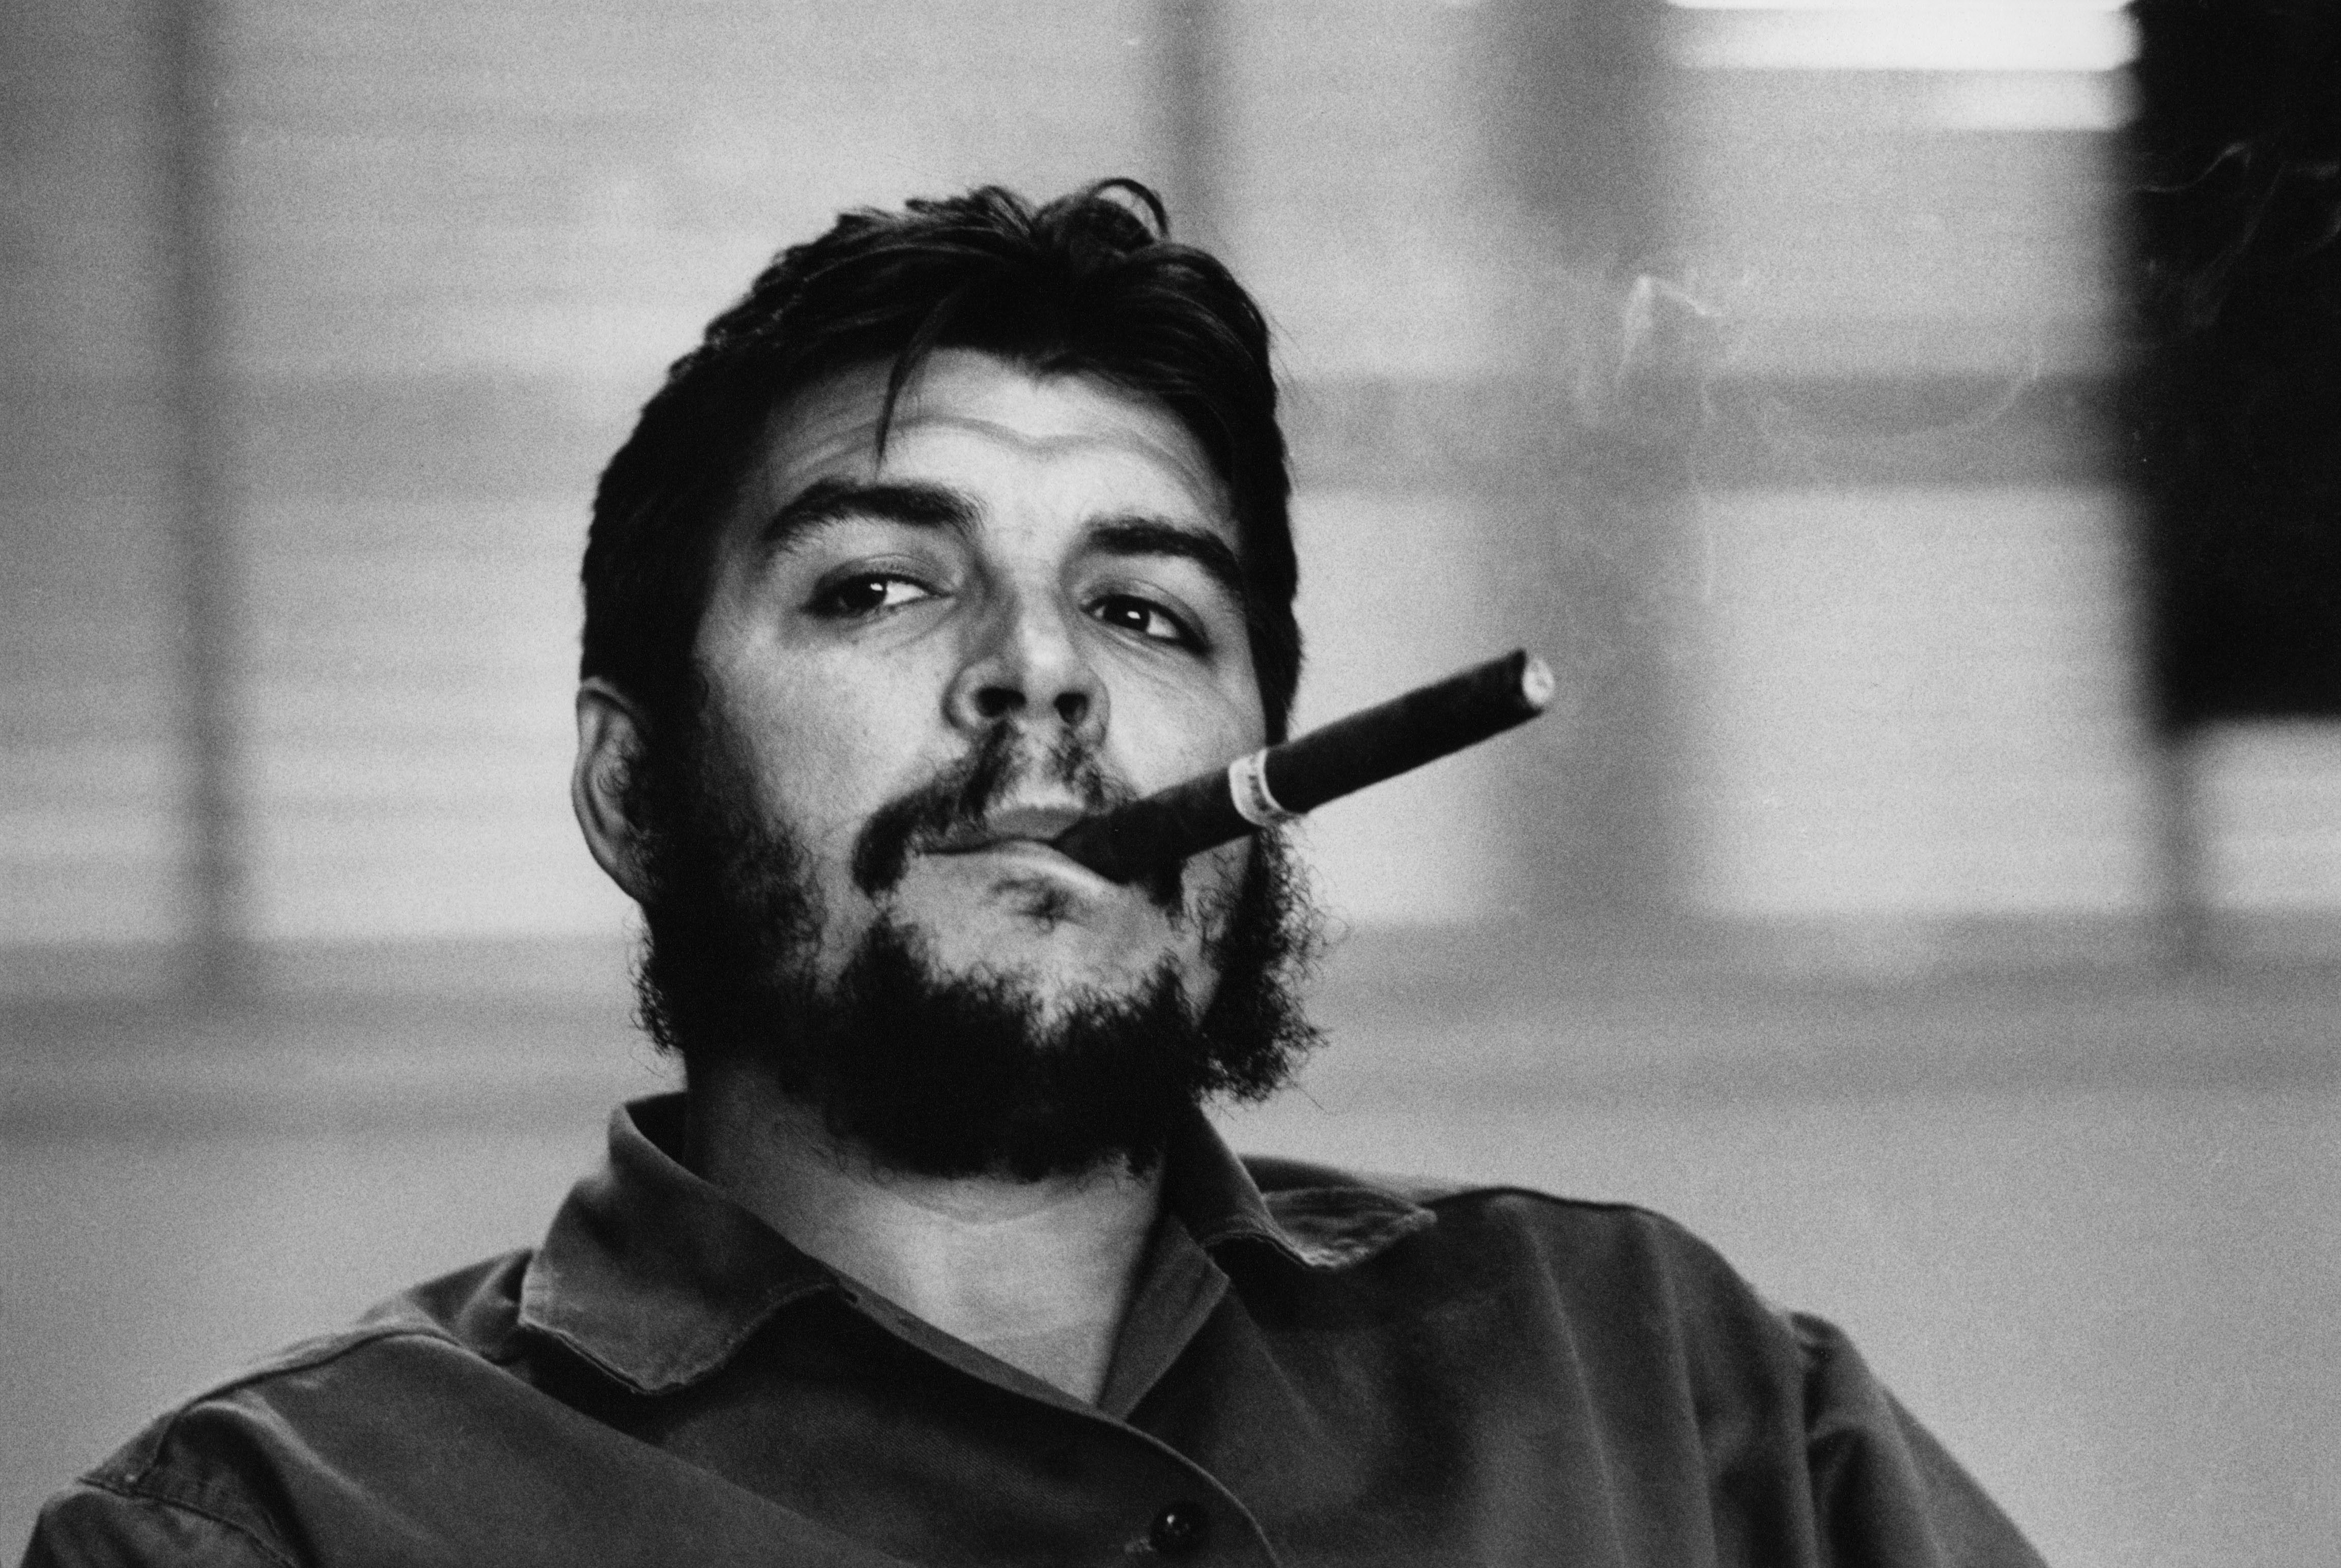 Wallpaper, men, portrait, moustache, revolutionary, Che Guevara